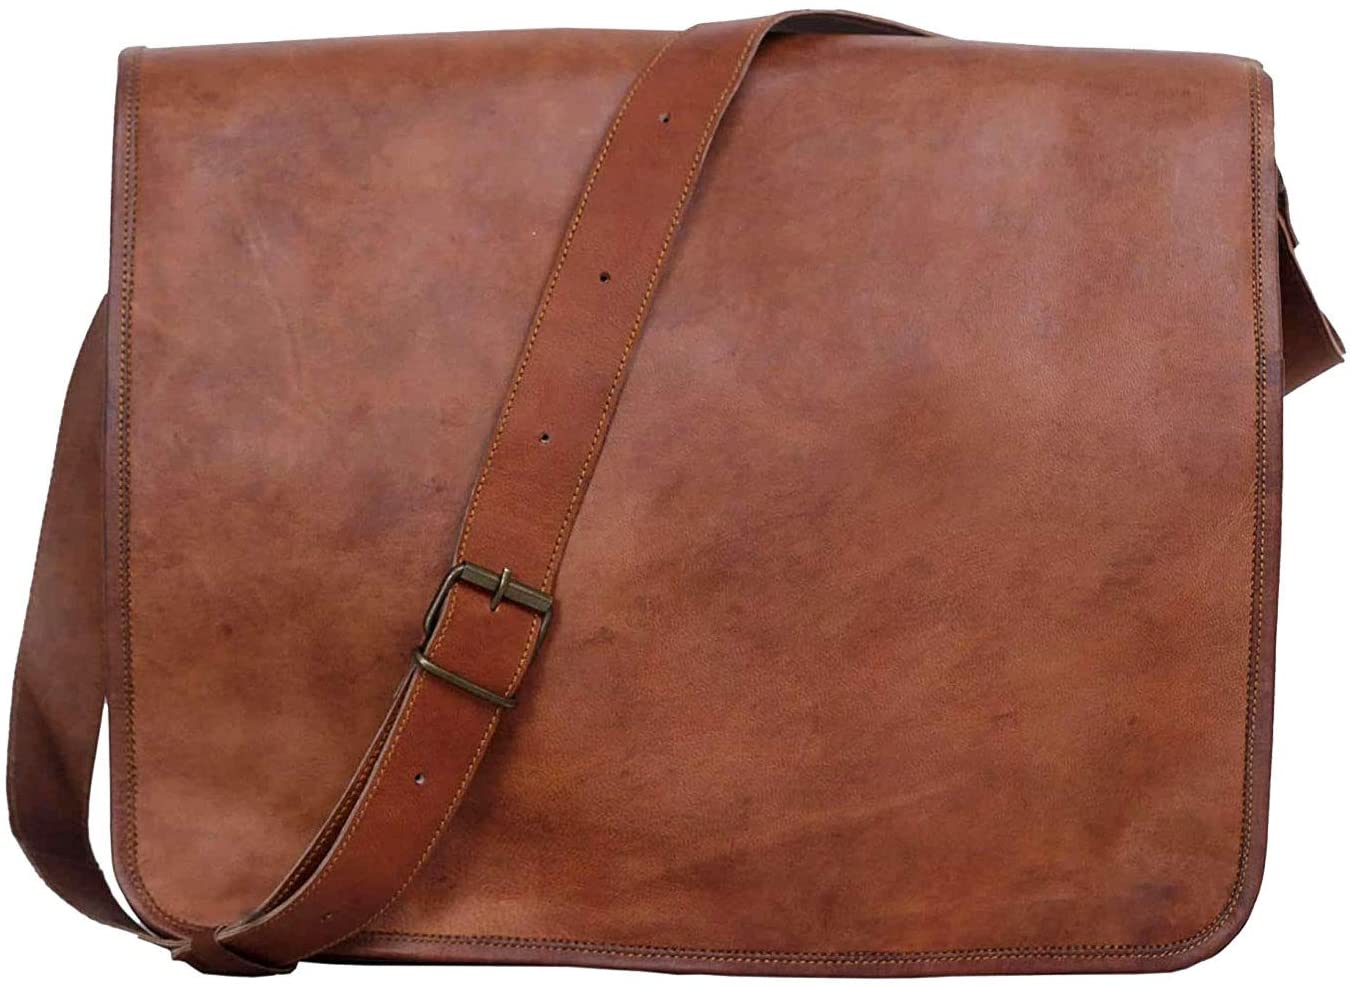 <strong>1. KPL 18 INCH Leather Laptop bag handmade messenger bags</strong>